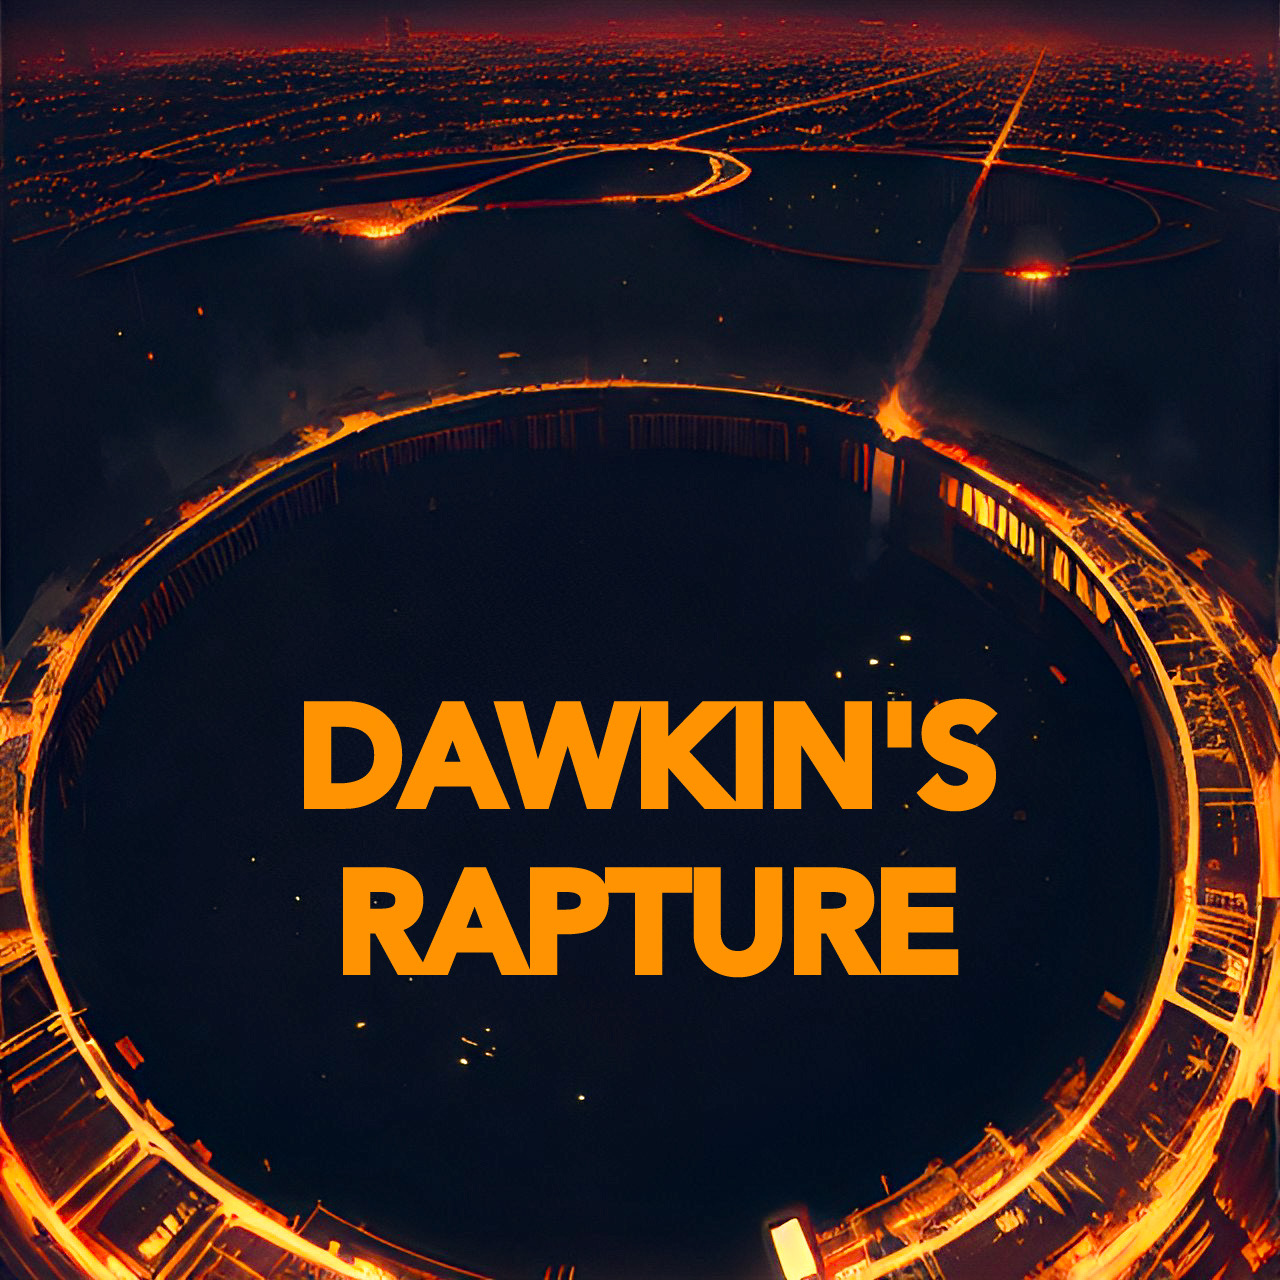 DAWKIN'S RAPTURE